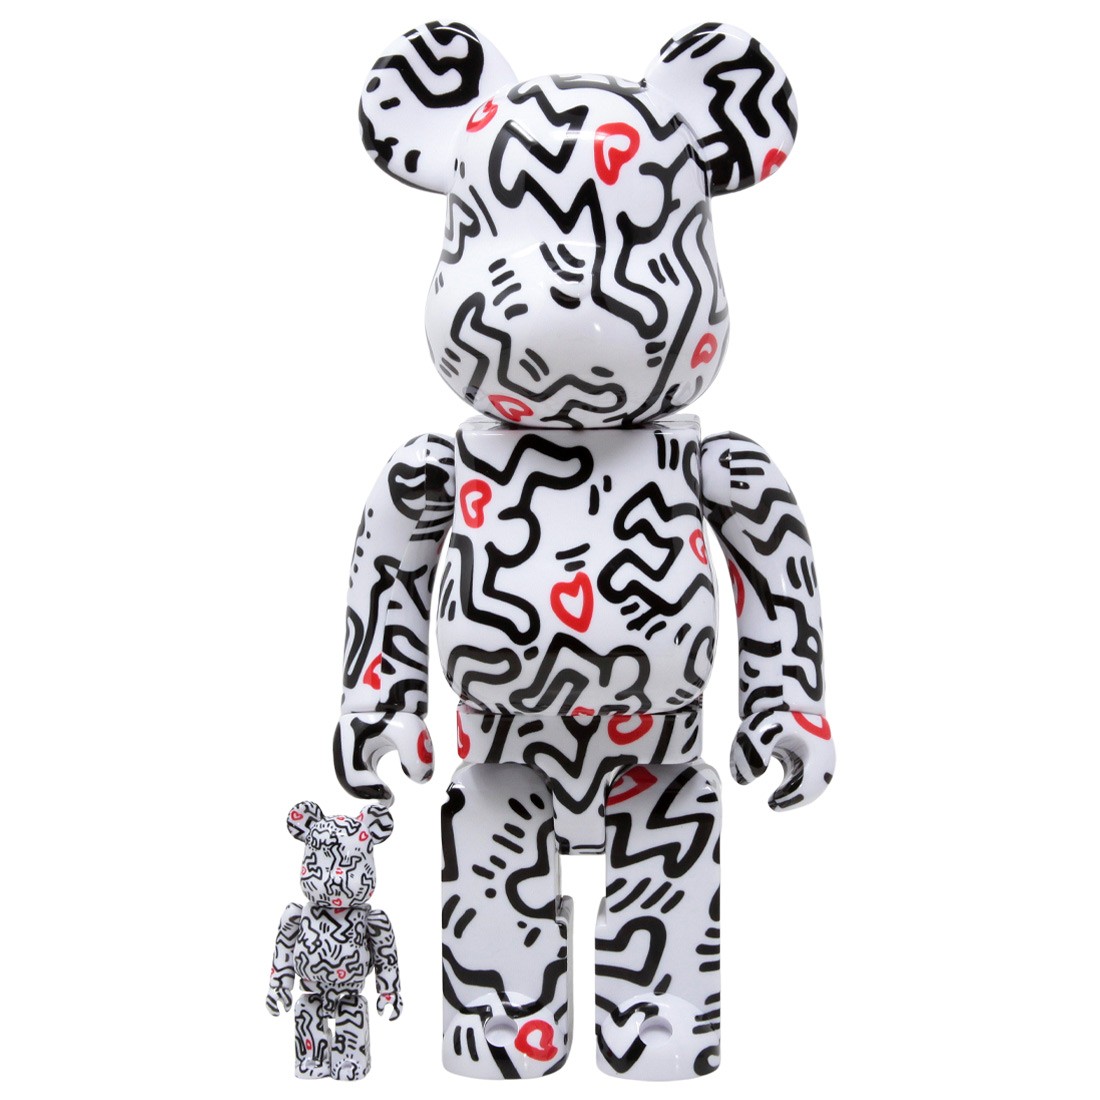 Medicom Keith Haring #8 100% 400% Bearbrick Figure Set (white)